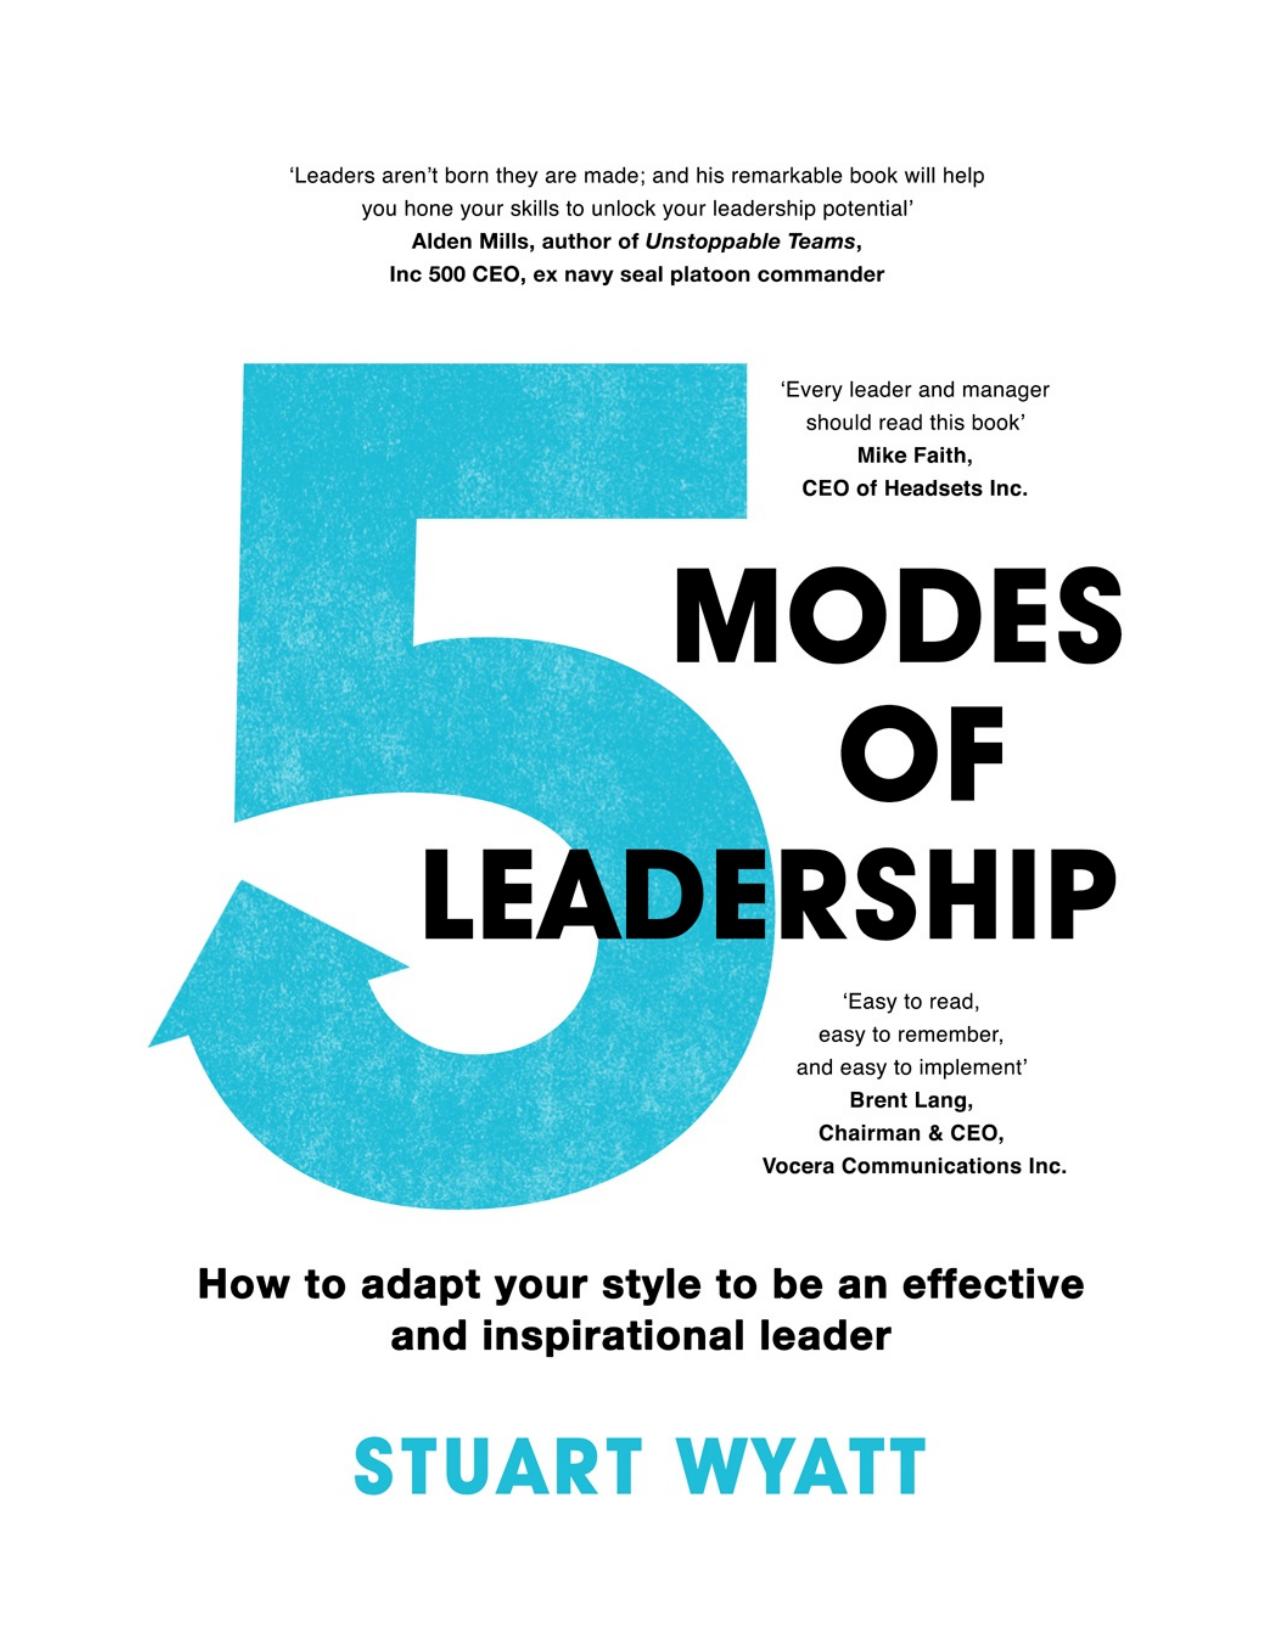 Five Modes of Leadership by Stuart Wyatt